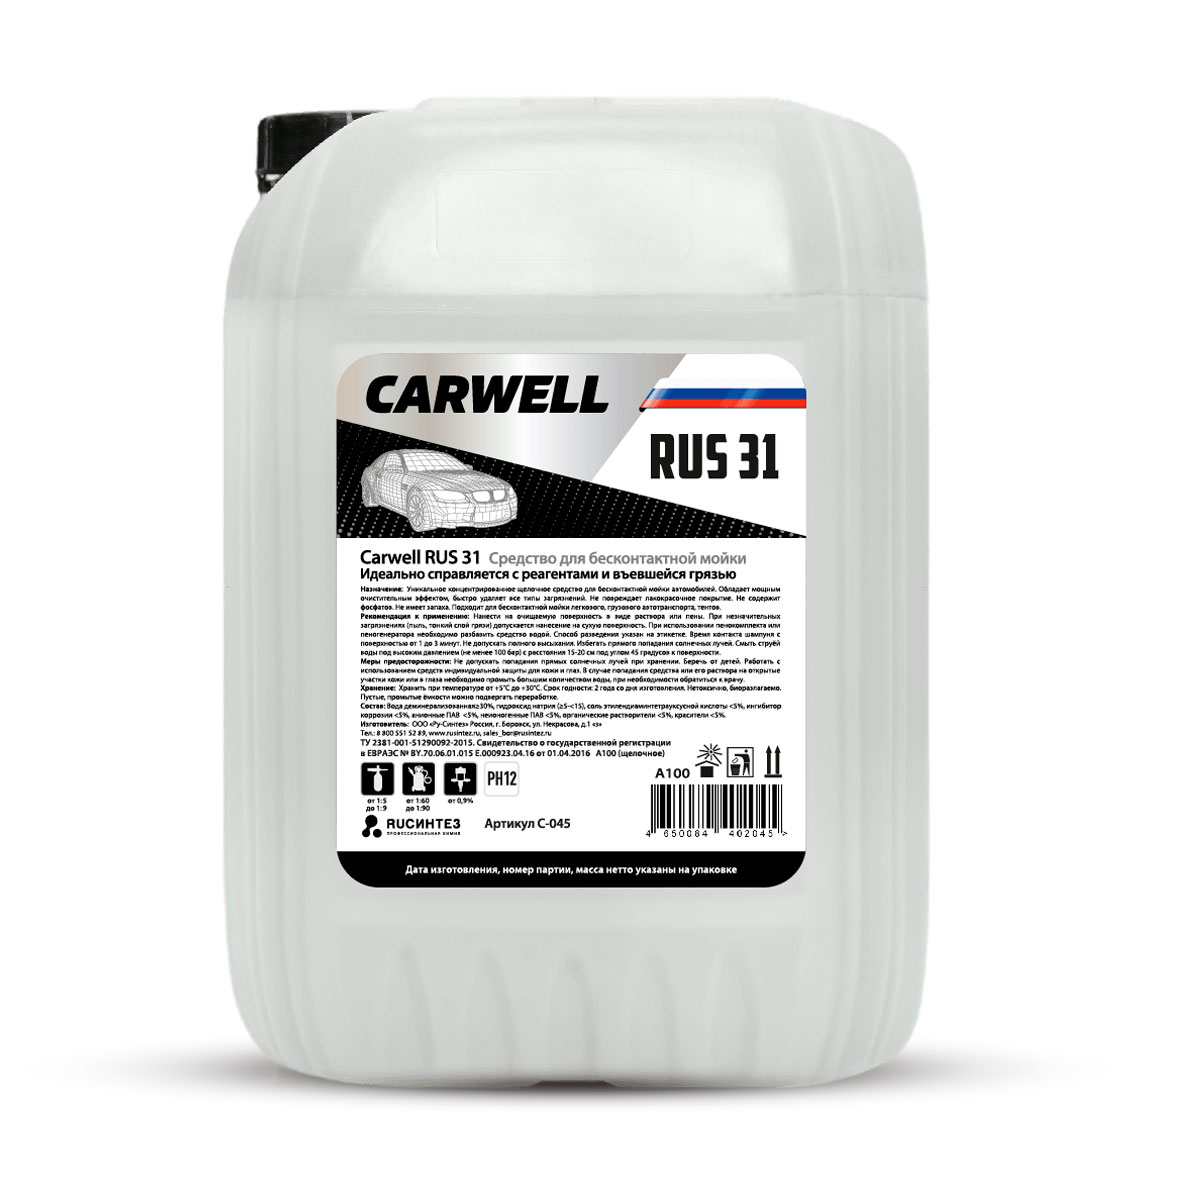 Carwell RUS 31